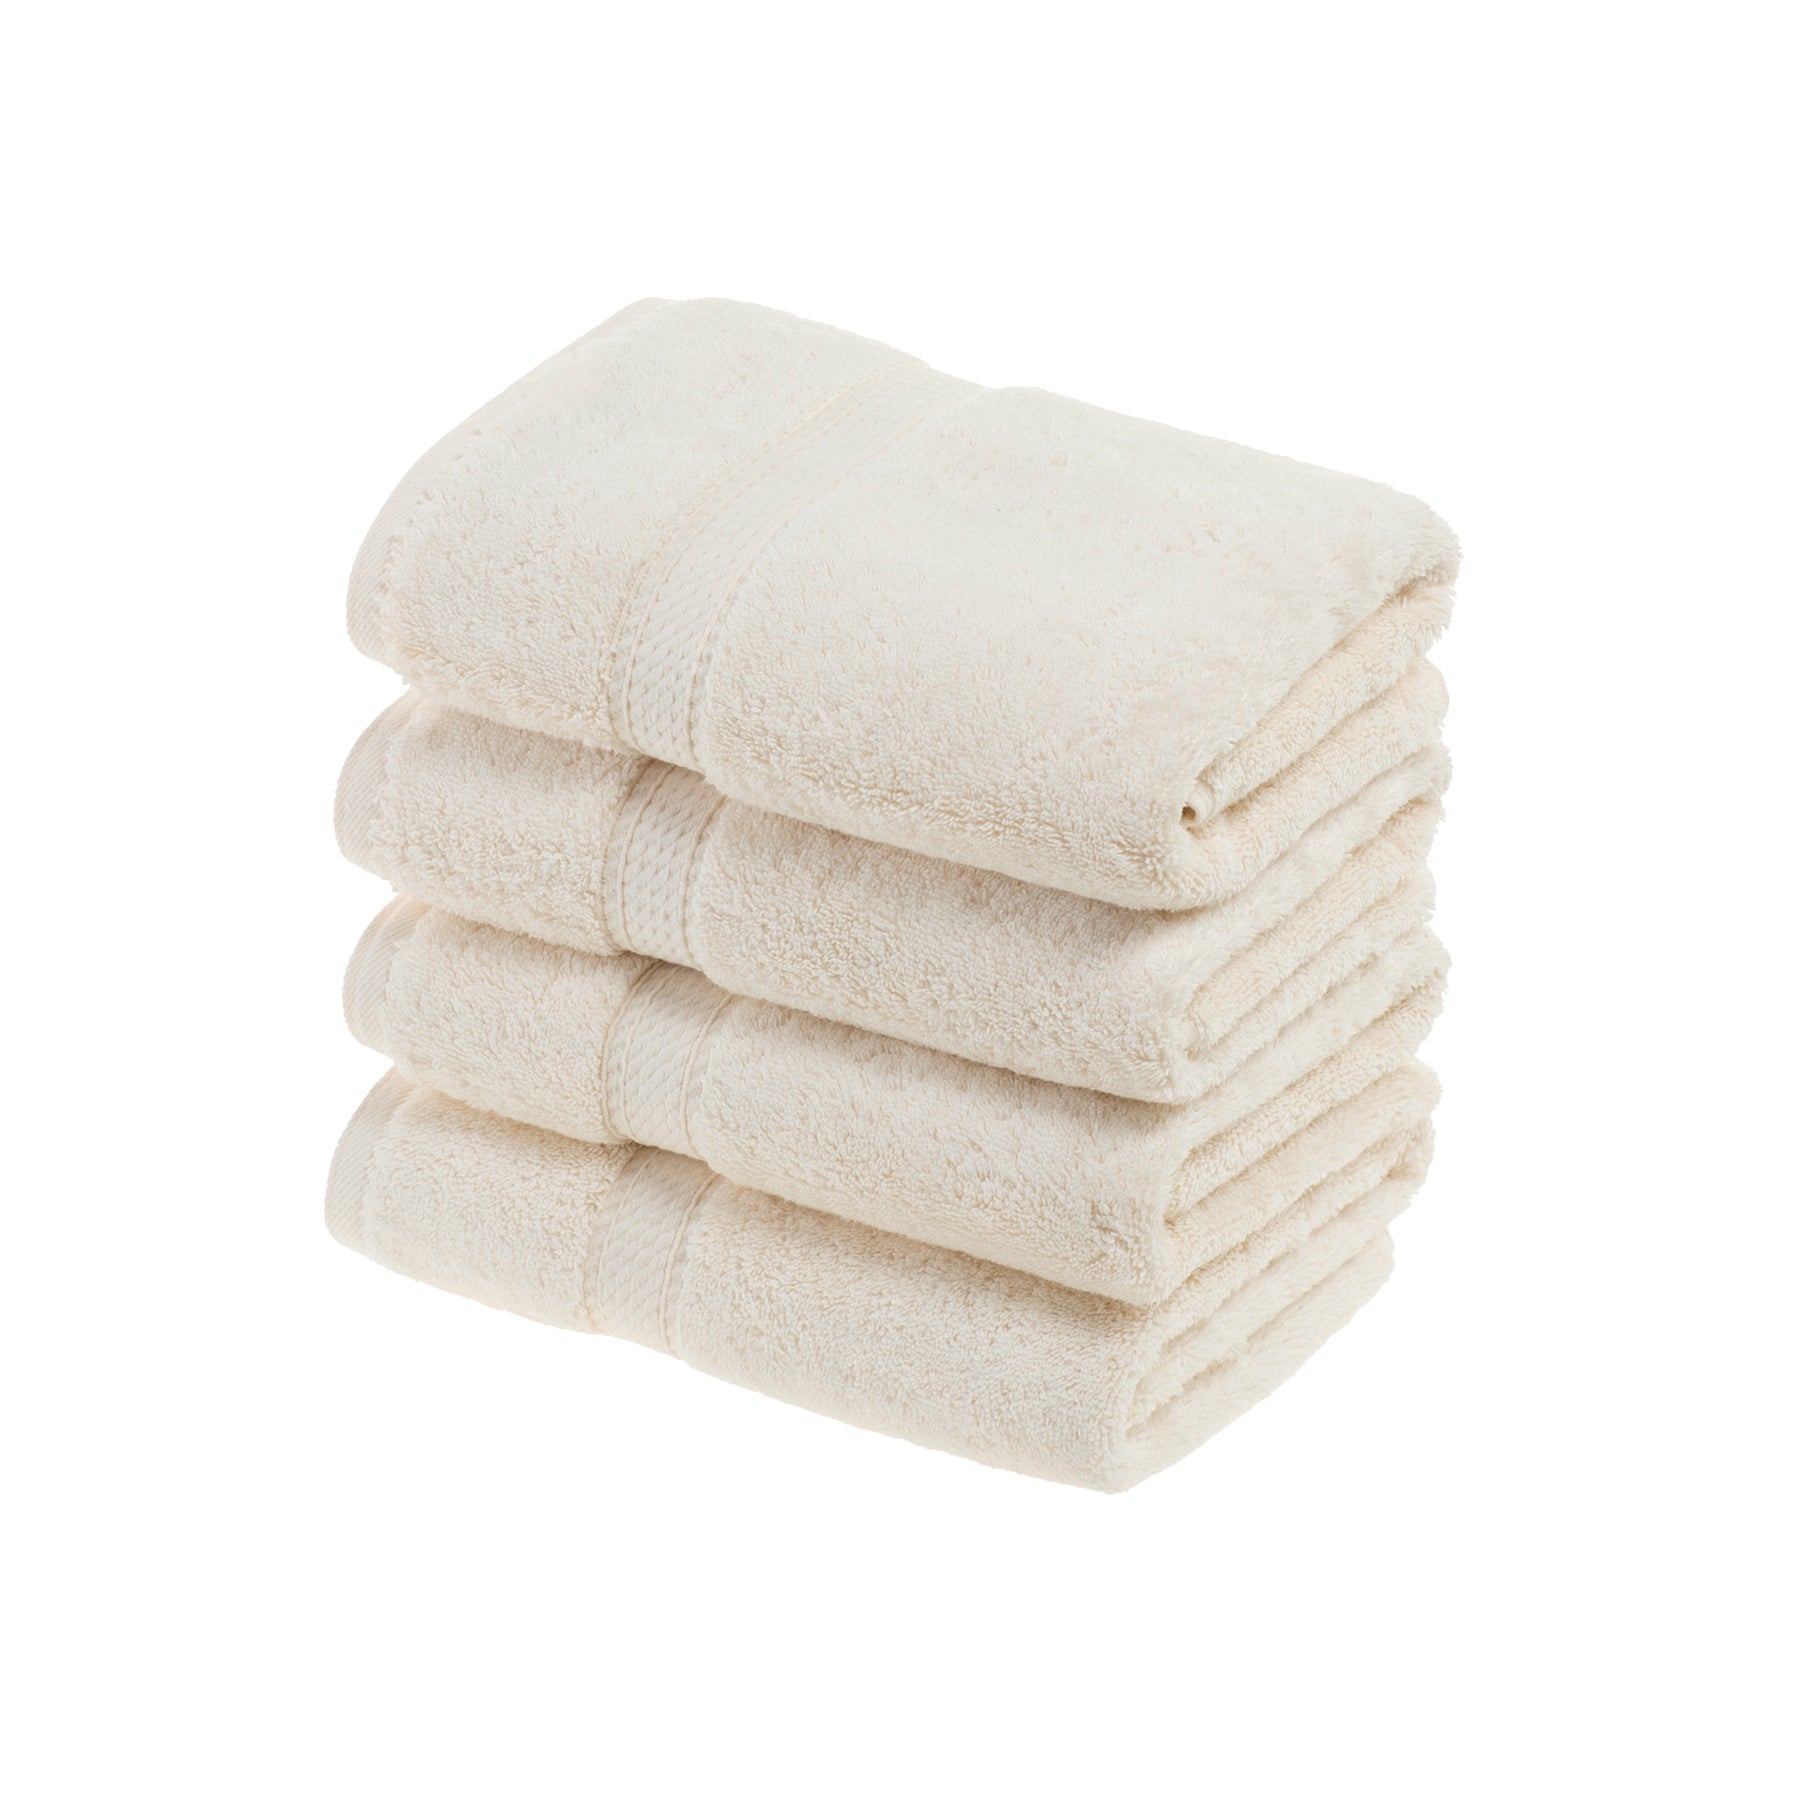 Solid Egyptian Cotton 4 Piece Hand Towel Set - Cream